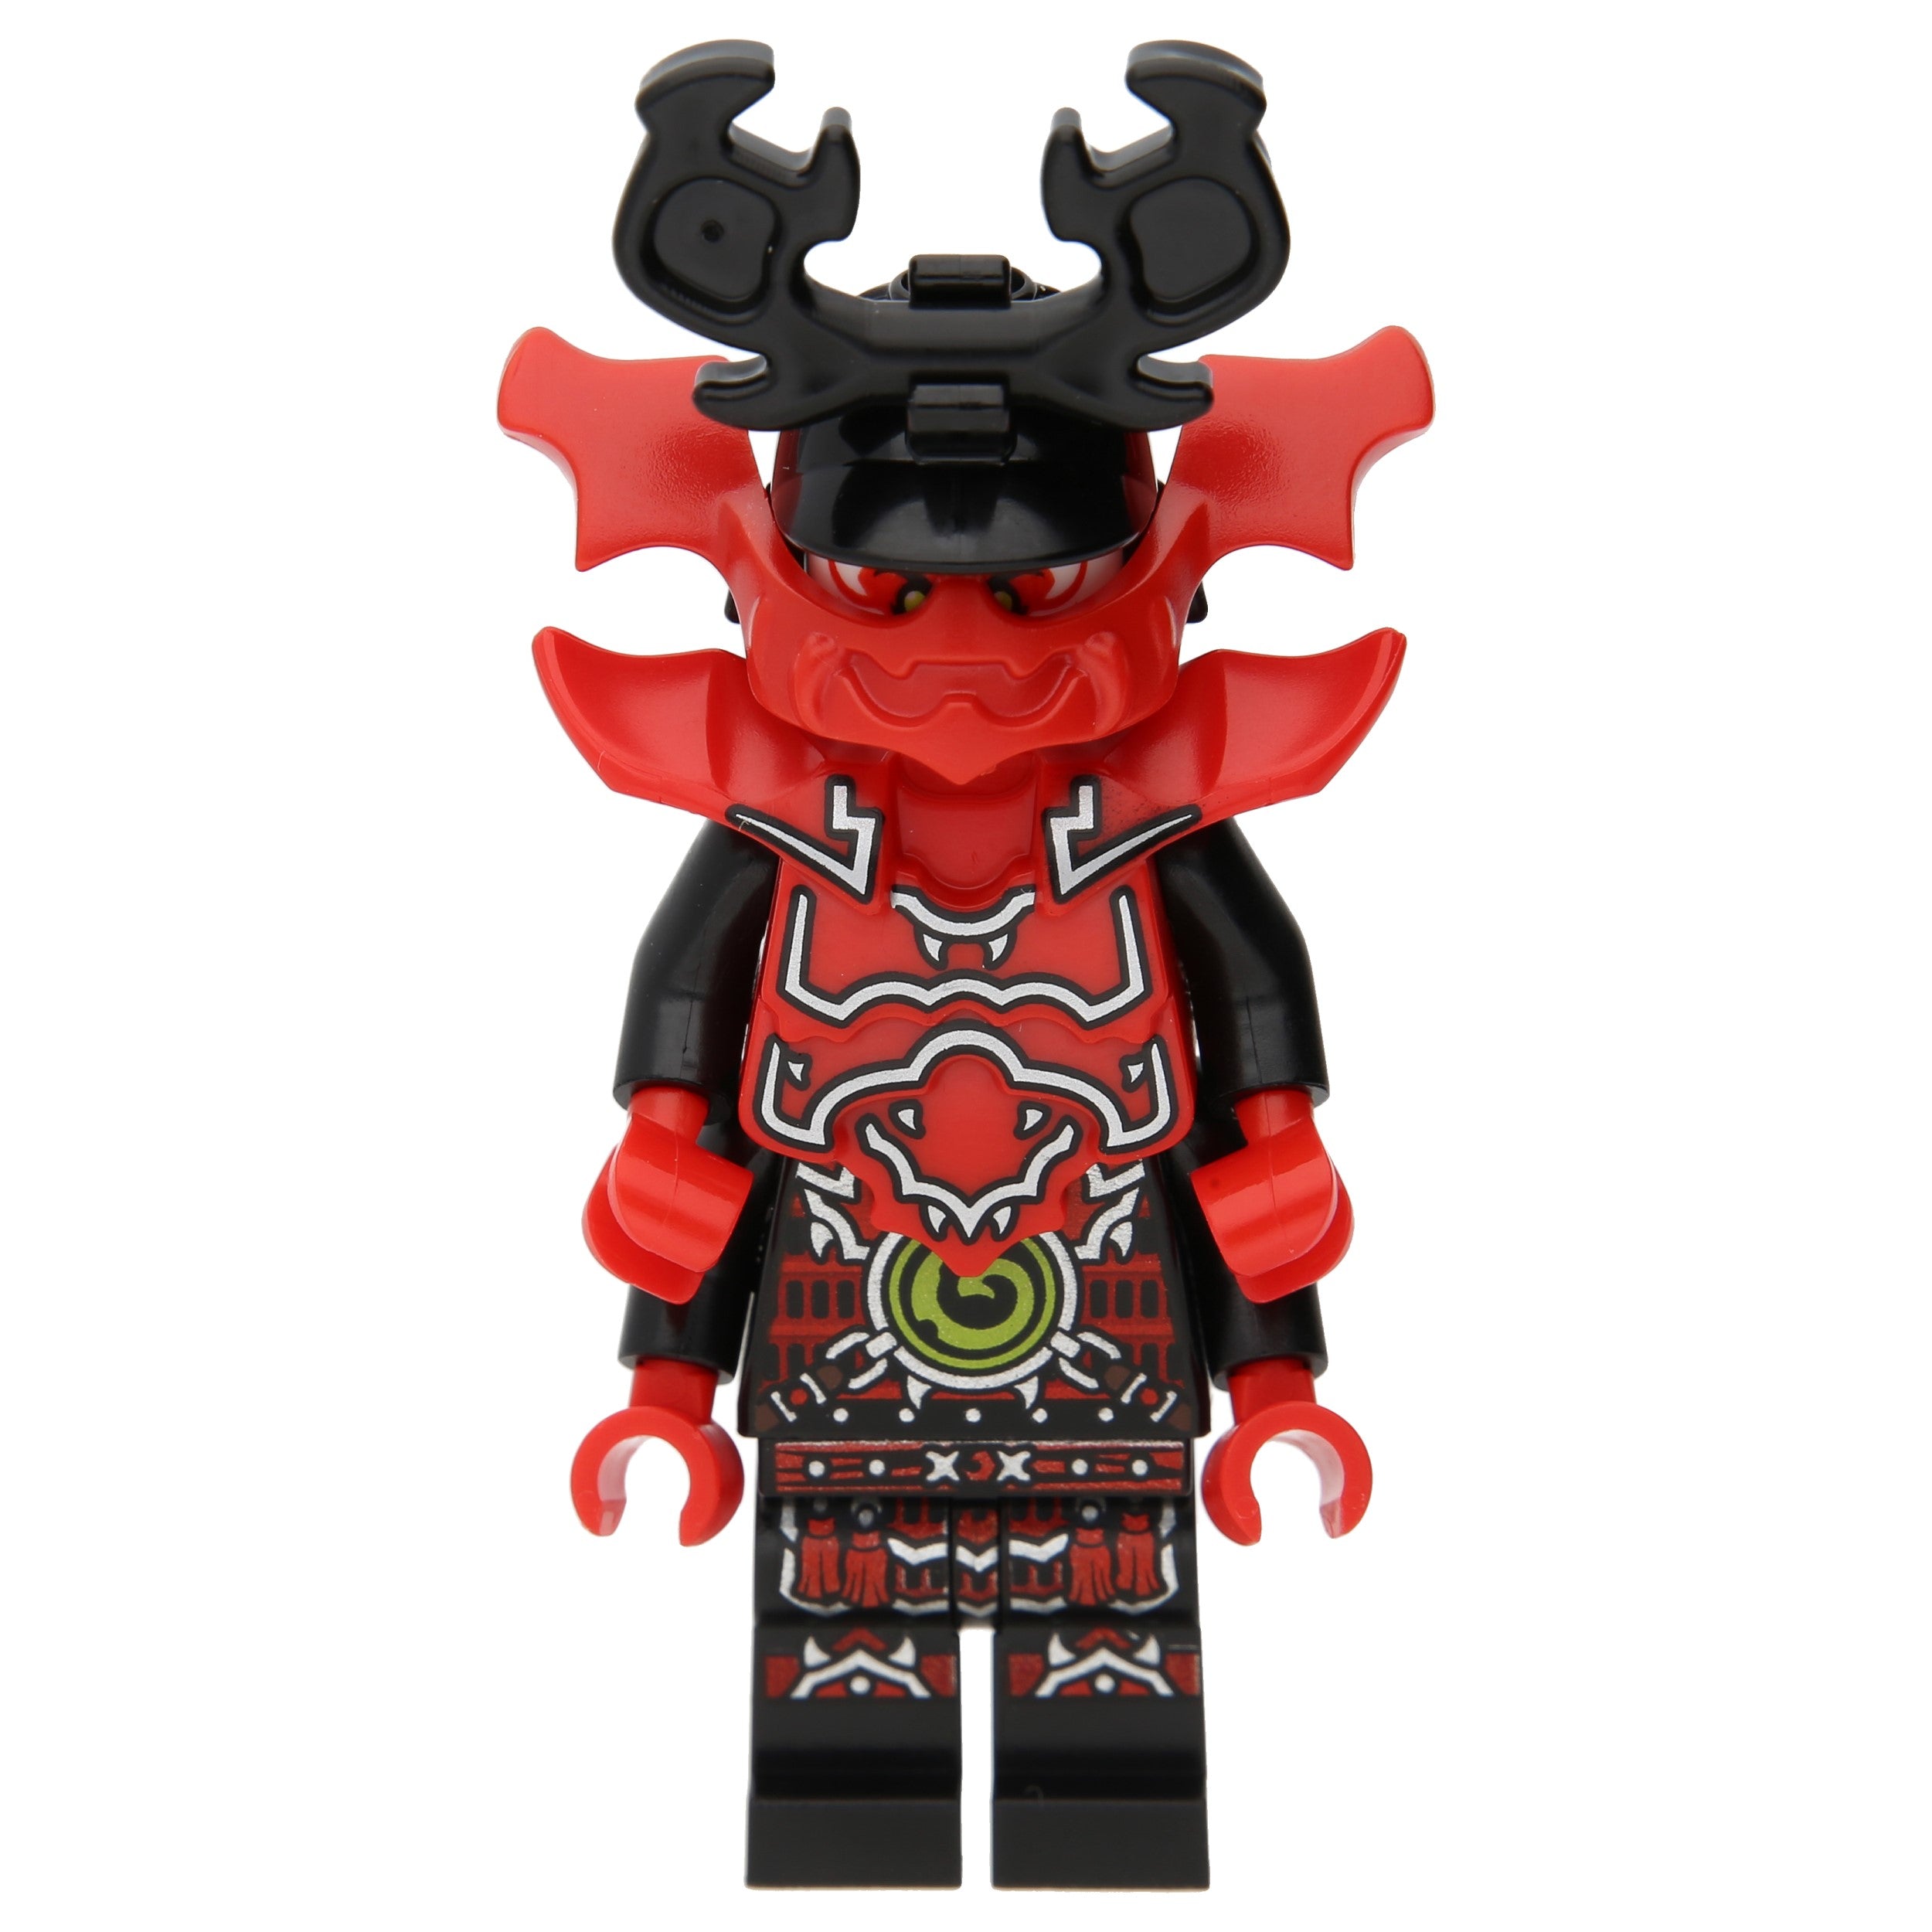 LEGO Ninjago Minifigure - General Kozu (black)